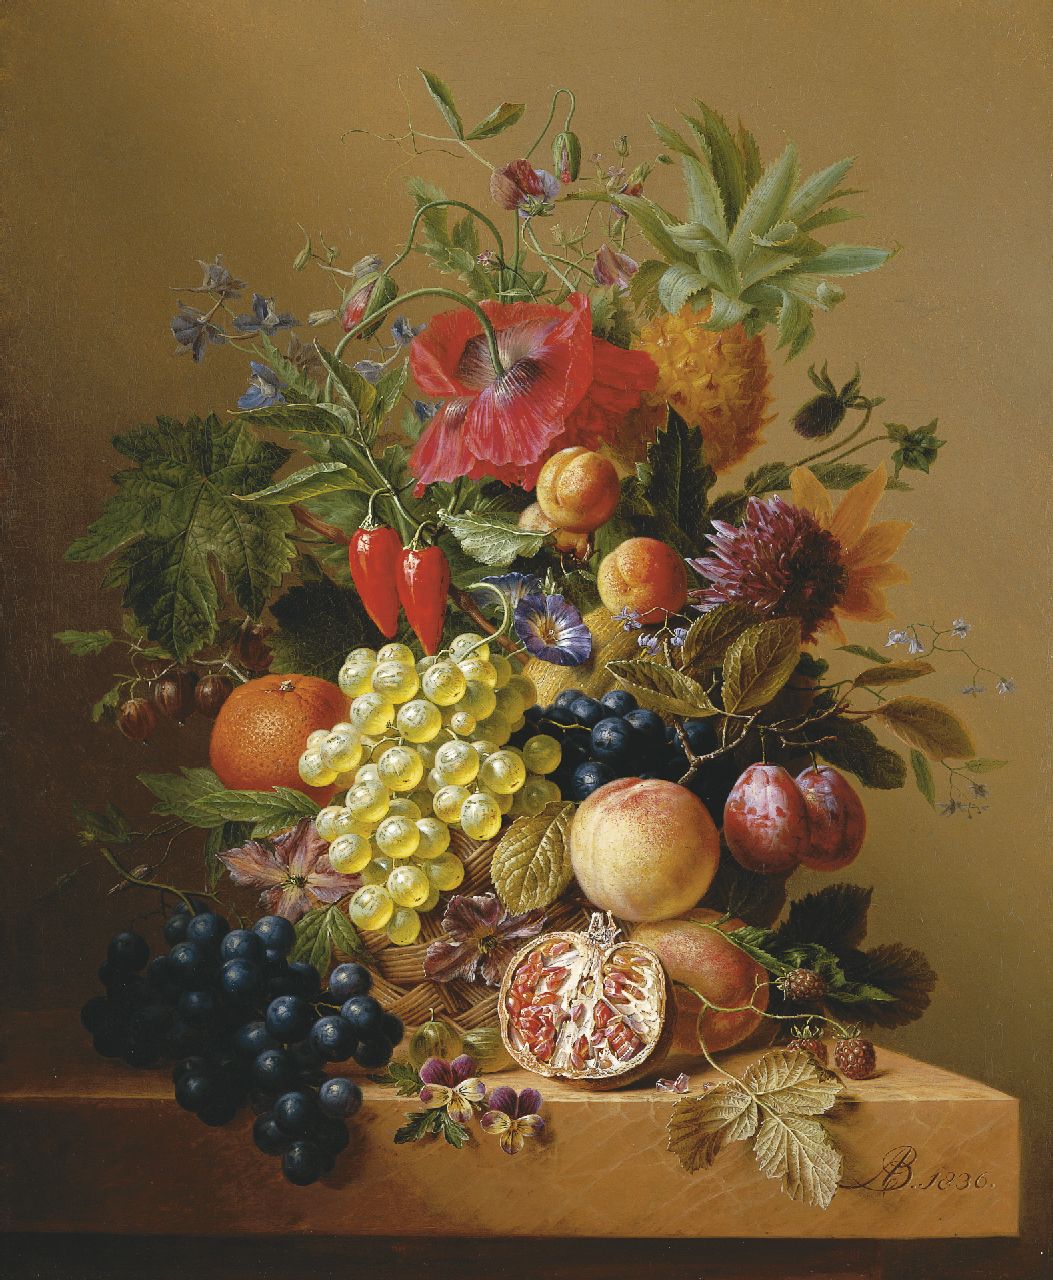 Bloemers A.  | Arnoldus Bloemers, Stilleven met bloemen, fruit en groente, olieverf op doek 65,0 x 54,0 cm, gesigneerd r.o met monogram en gedateerd 1836